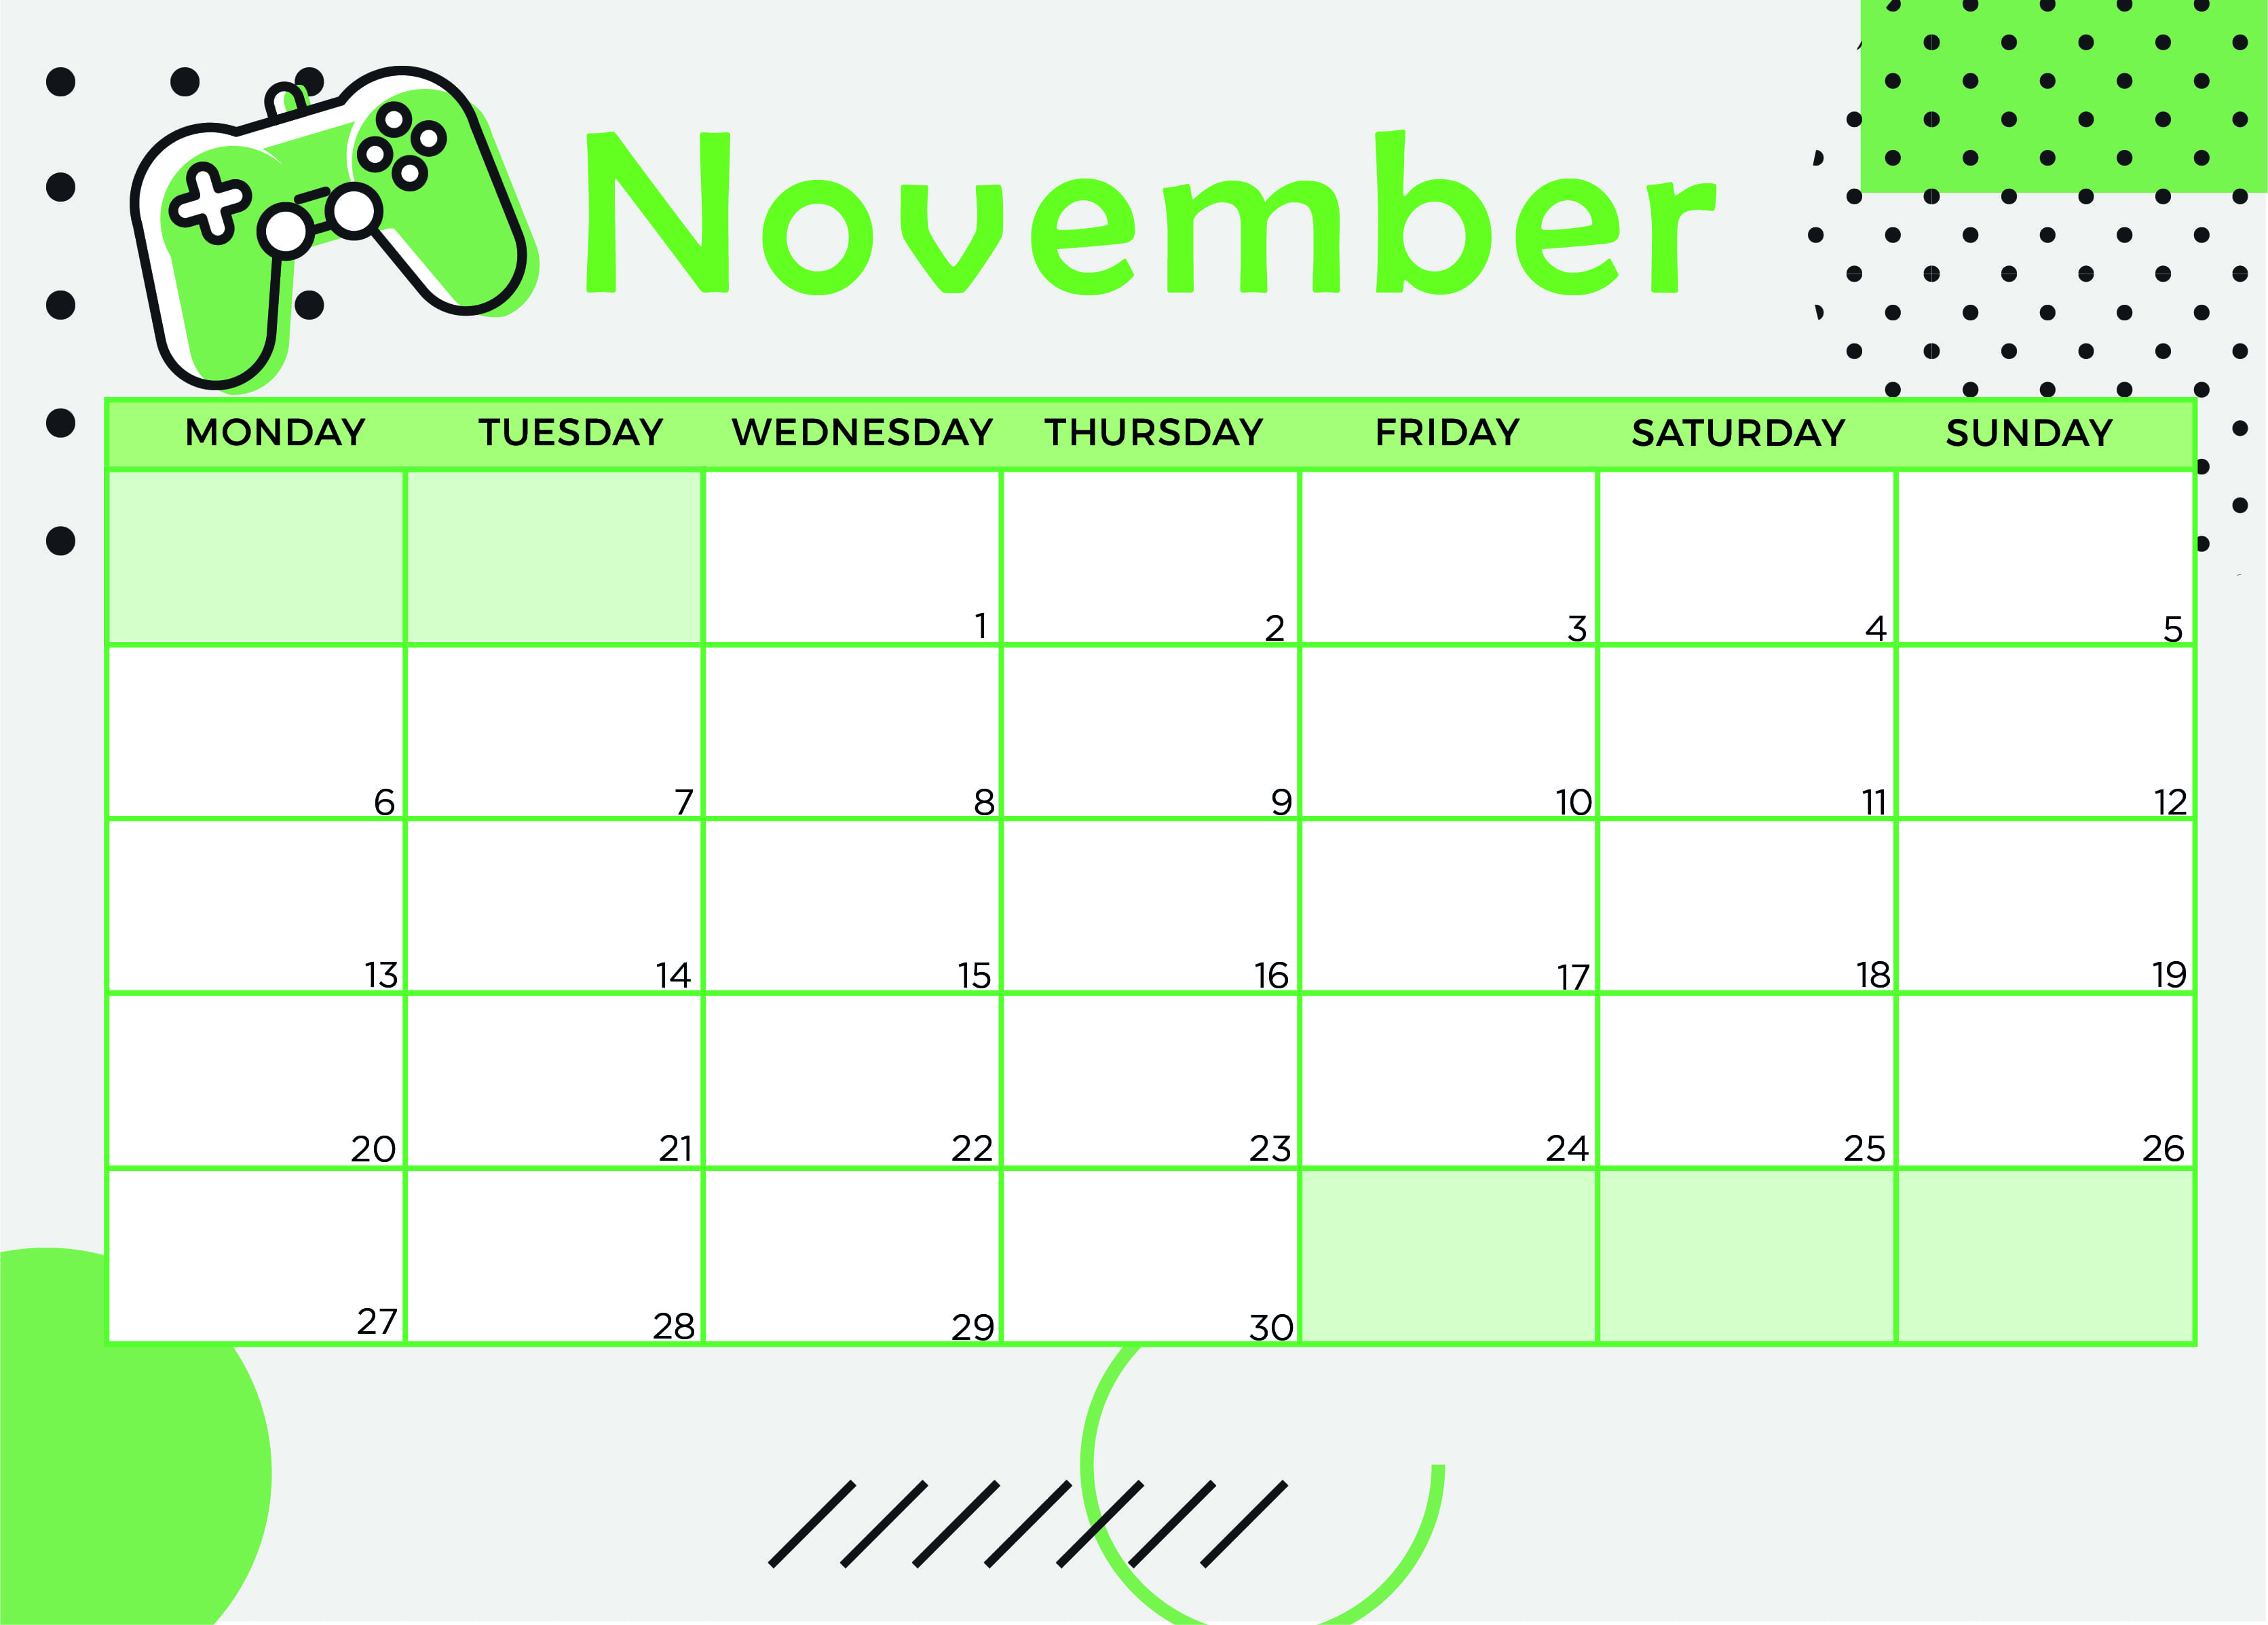 Printable November 2023 Calendar